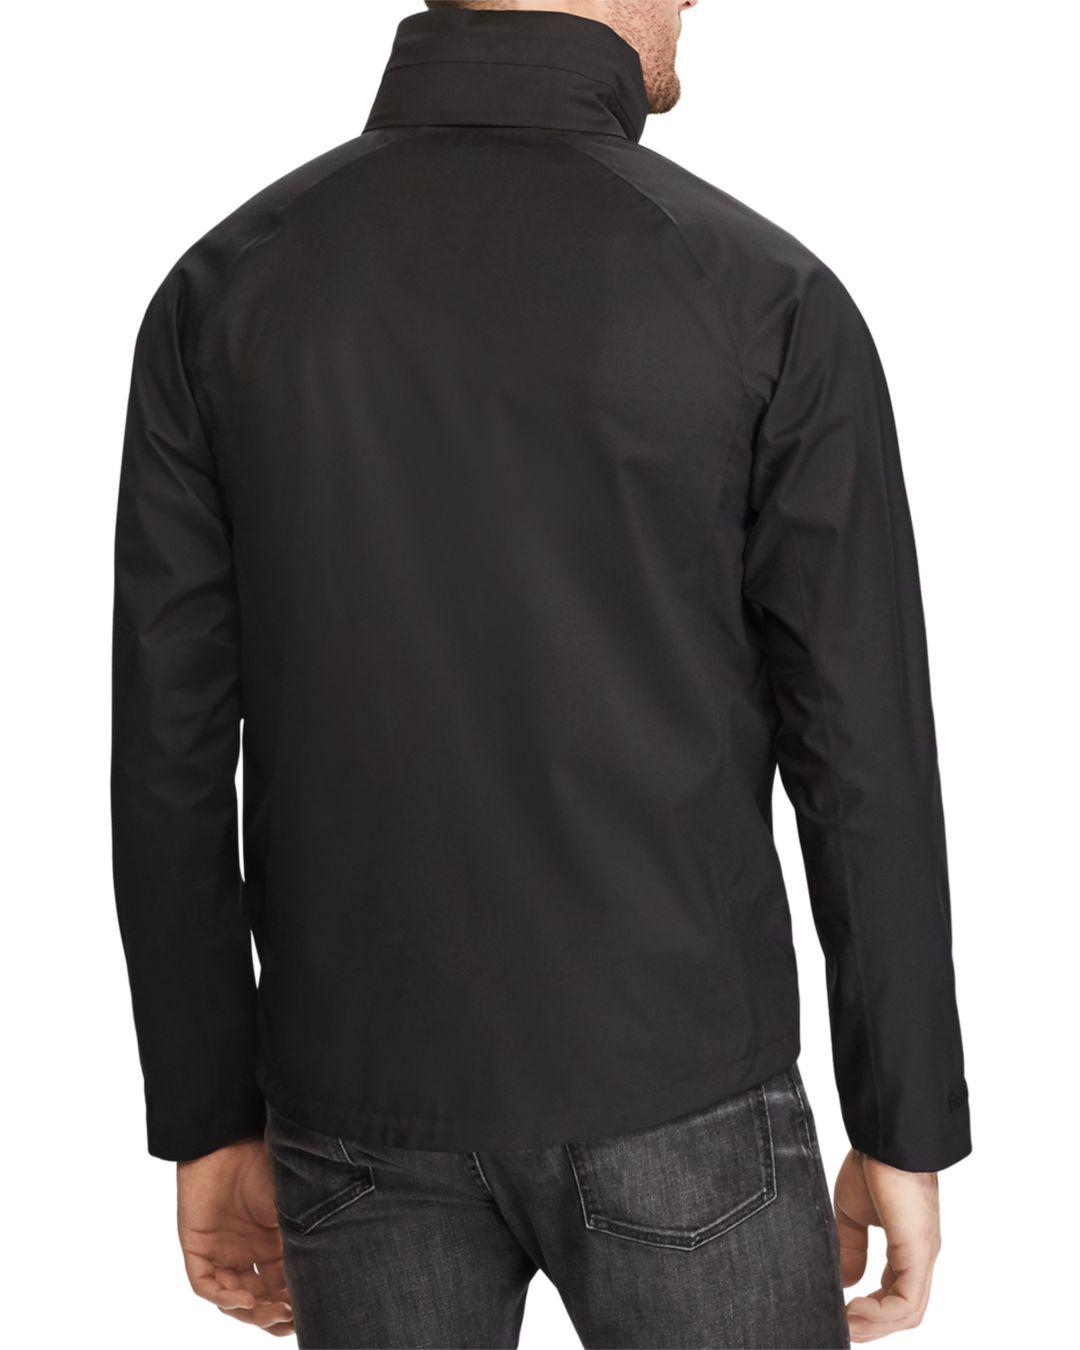 Polo Ralph Lauren Lightweight Waterproof Jacket in Black for Men - Lyst